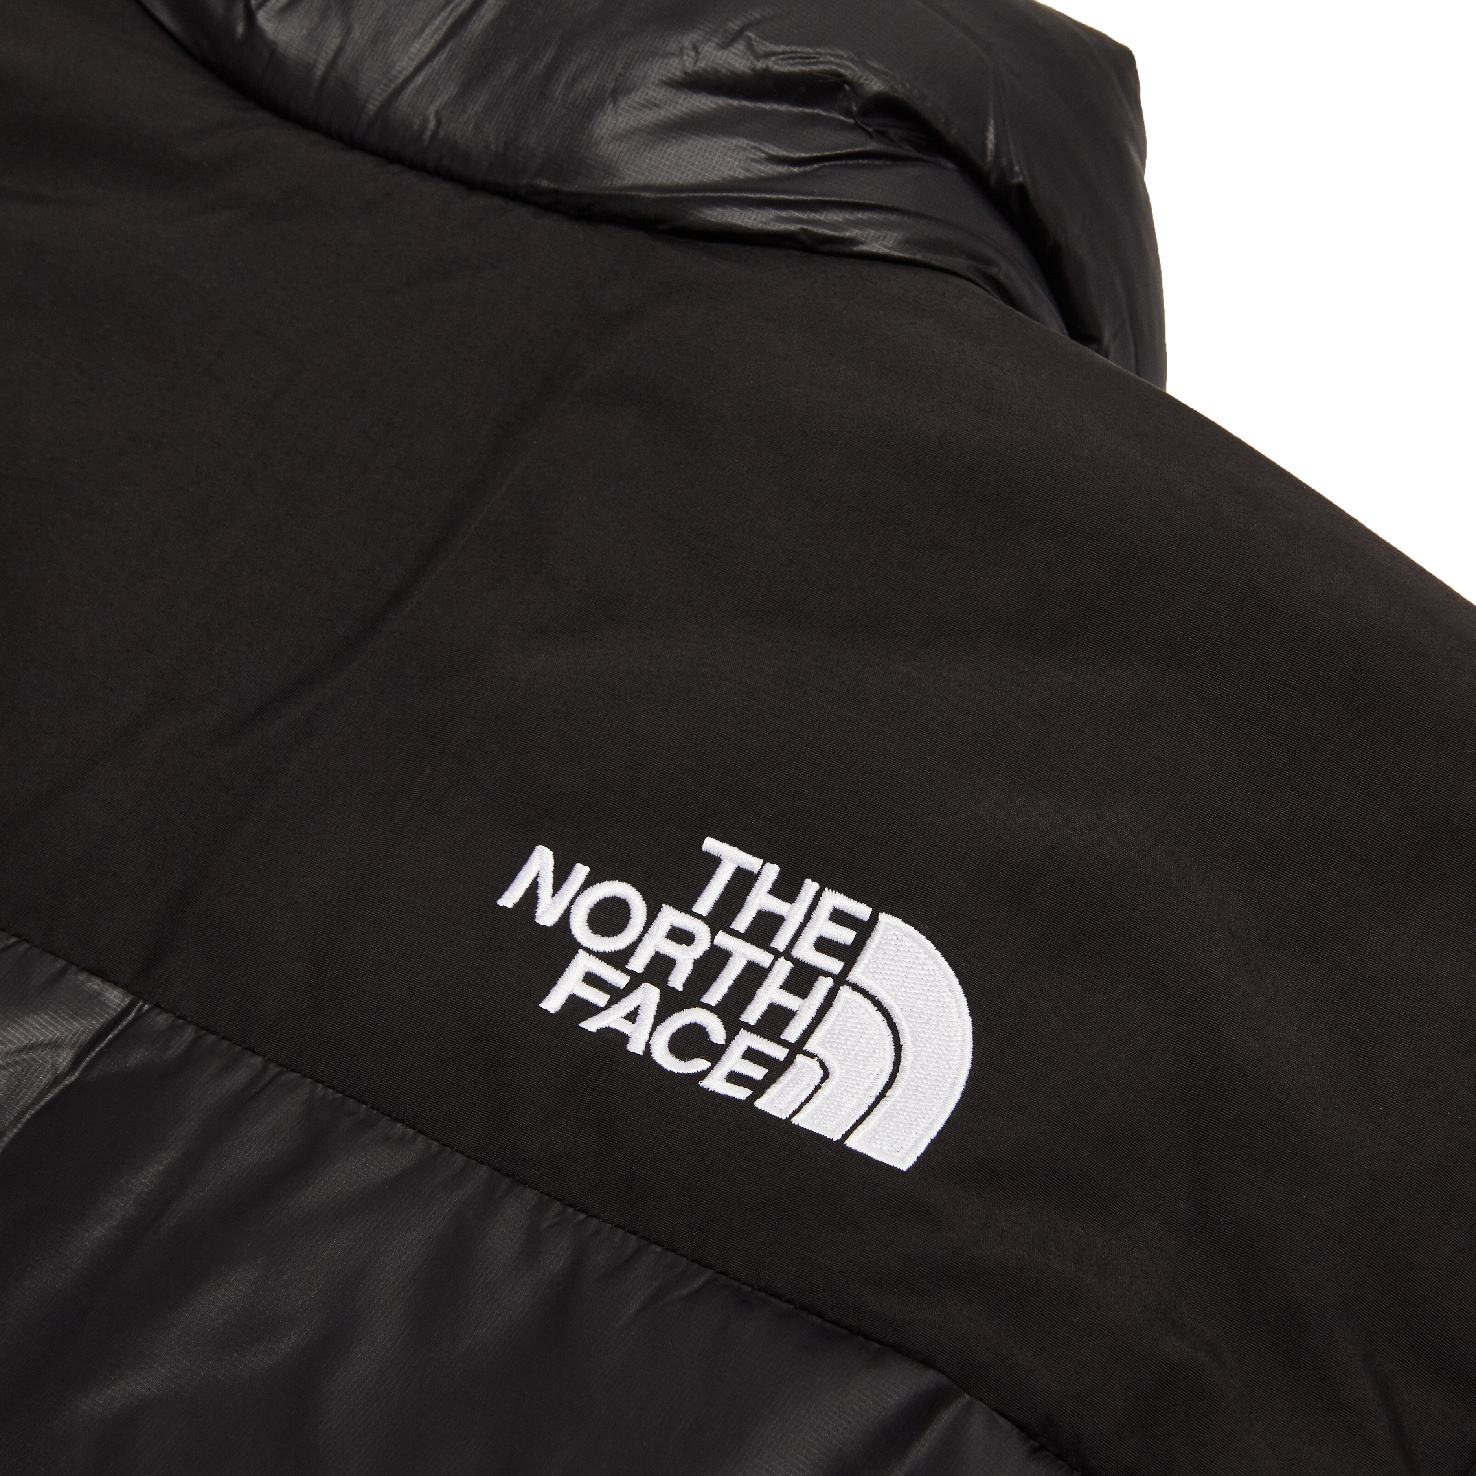 Himalayan Insulated Jacket NORTH FACE, размер 48-50, цвет черный NFTA4QYZ - фото 5